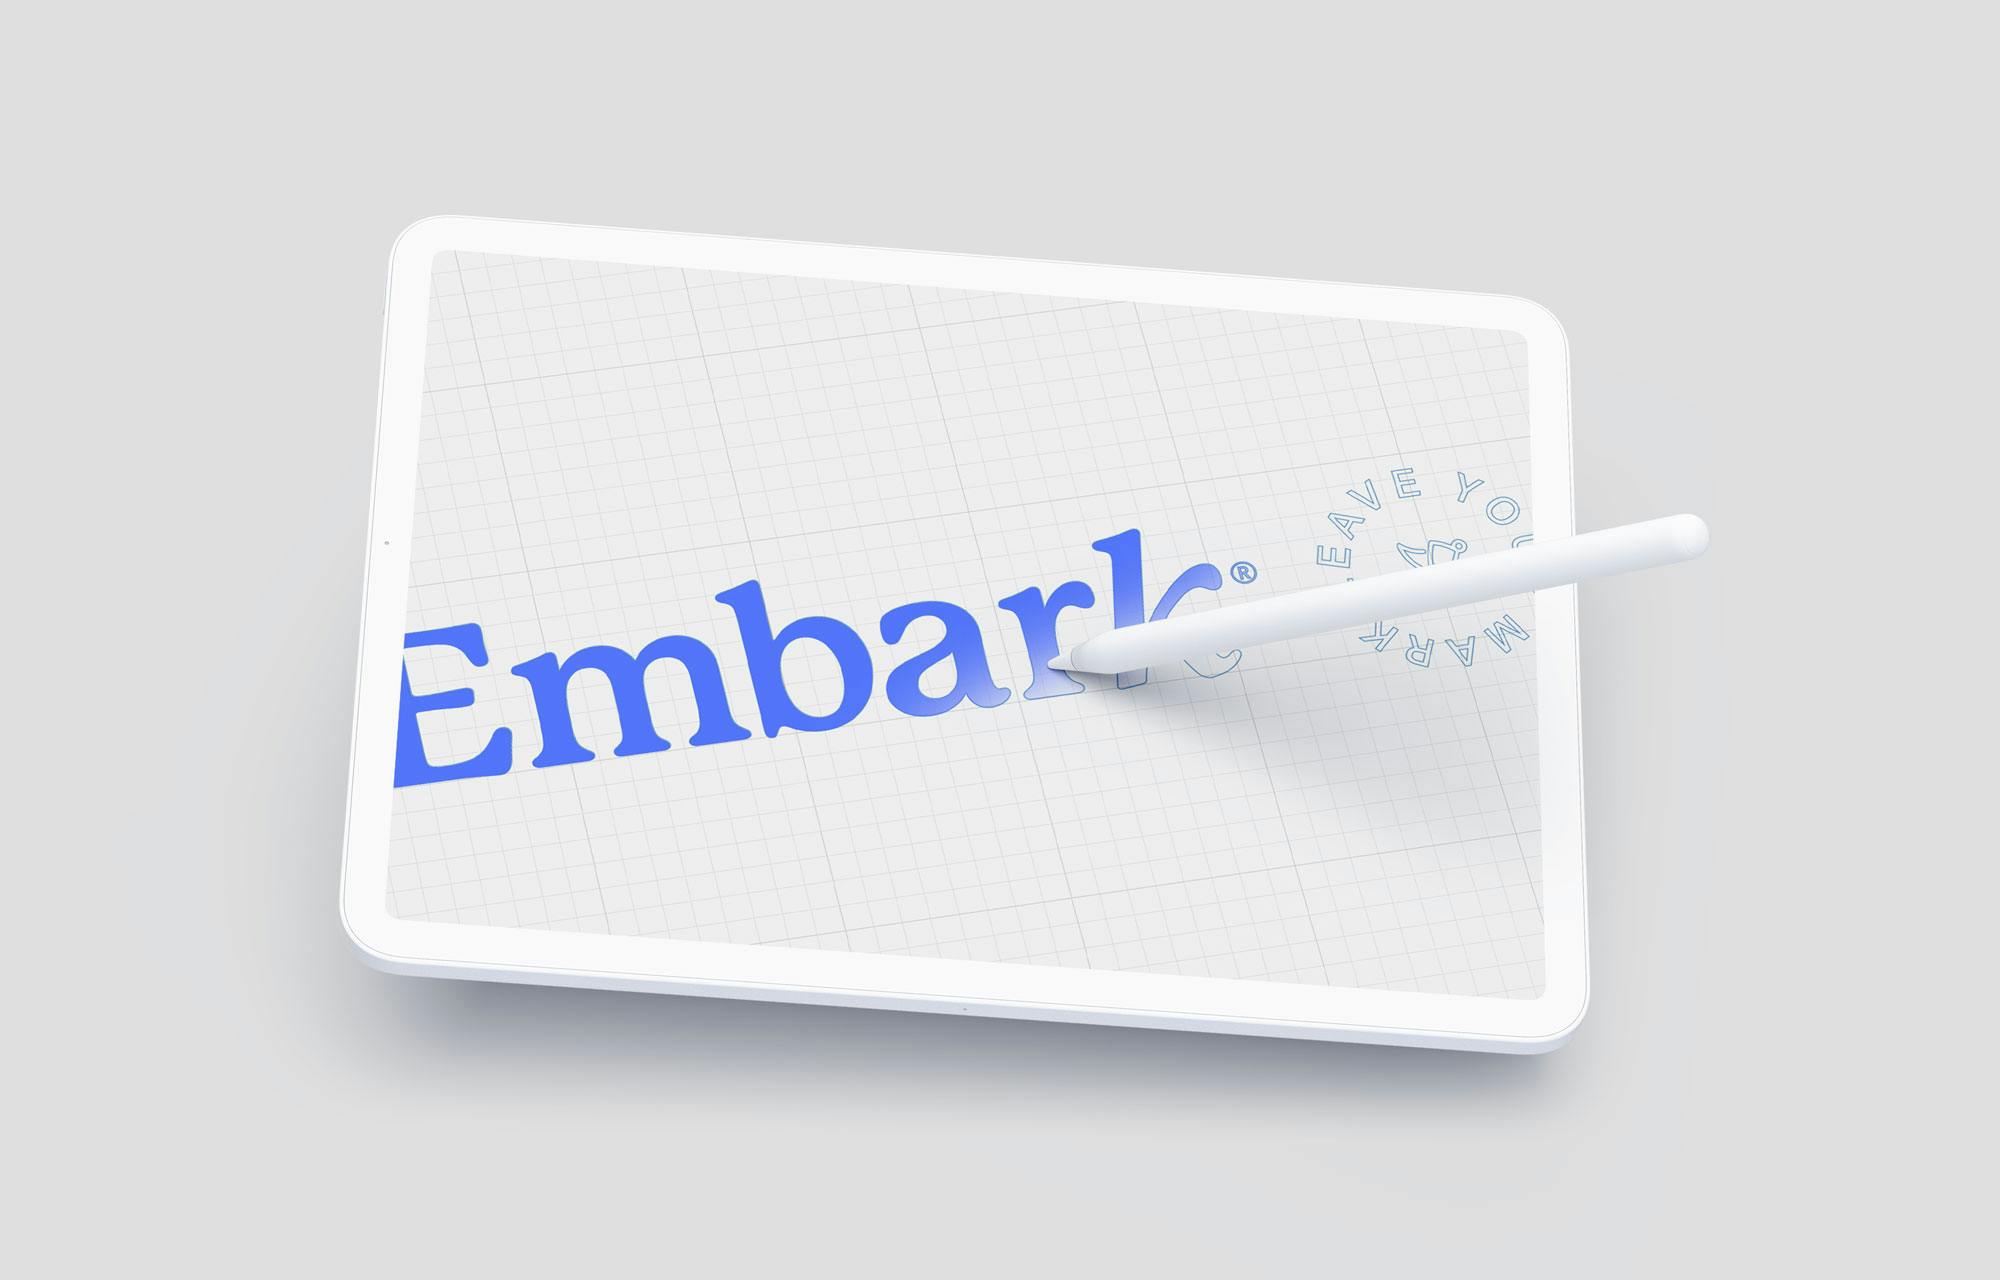 Embark Logo being drawn on an iPad